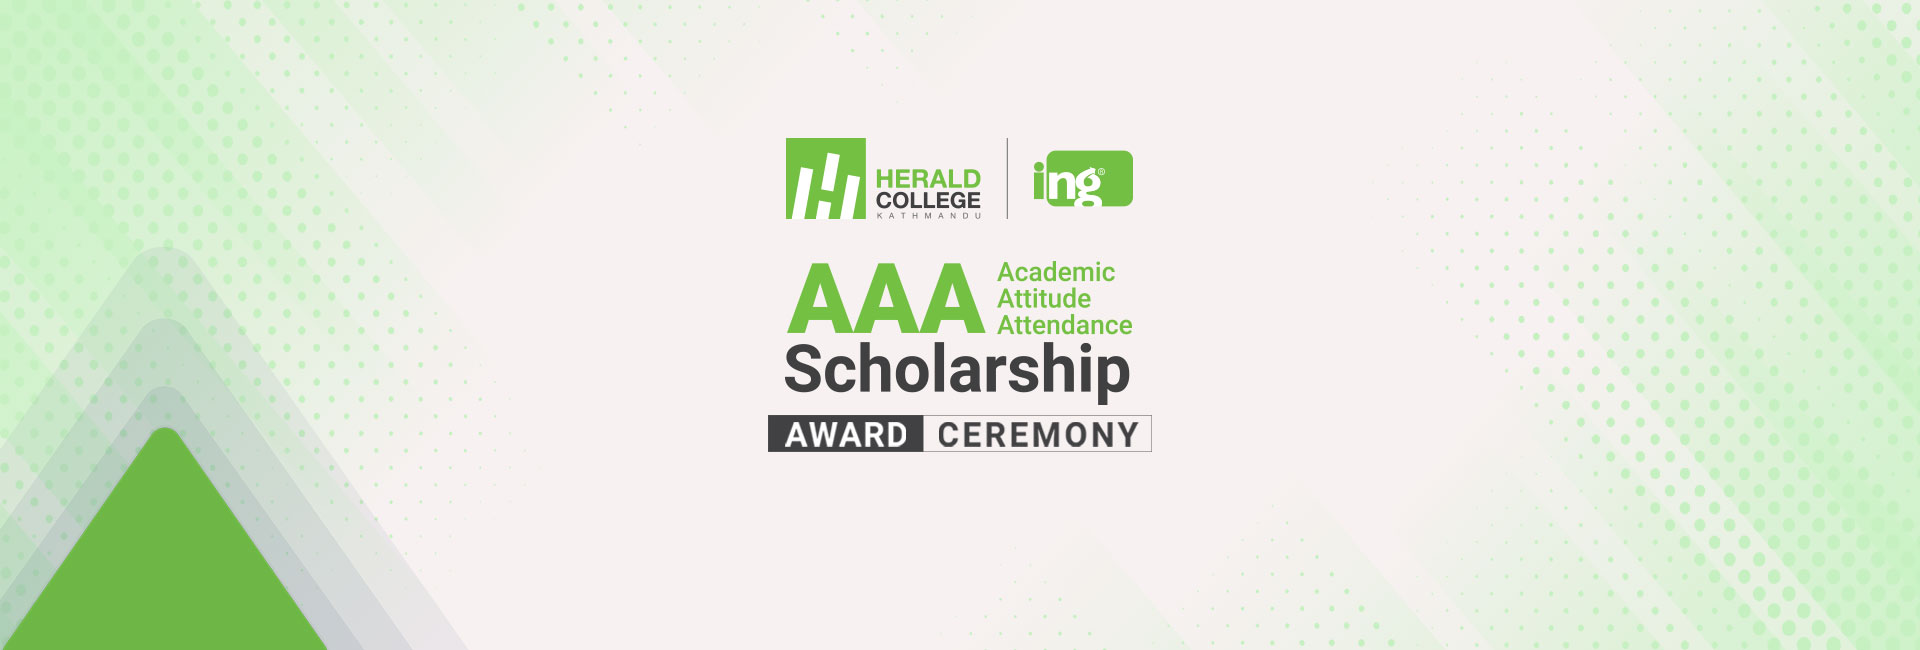 Herald College AAA Scholarship Award Ceremony